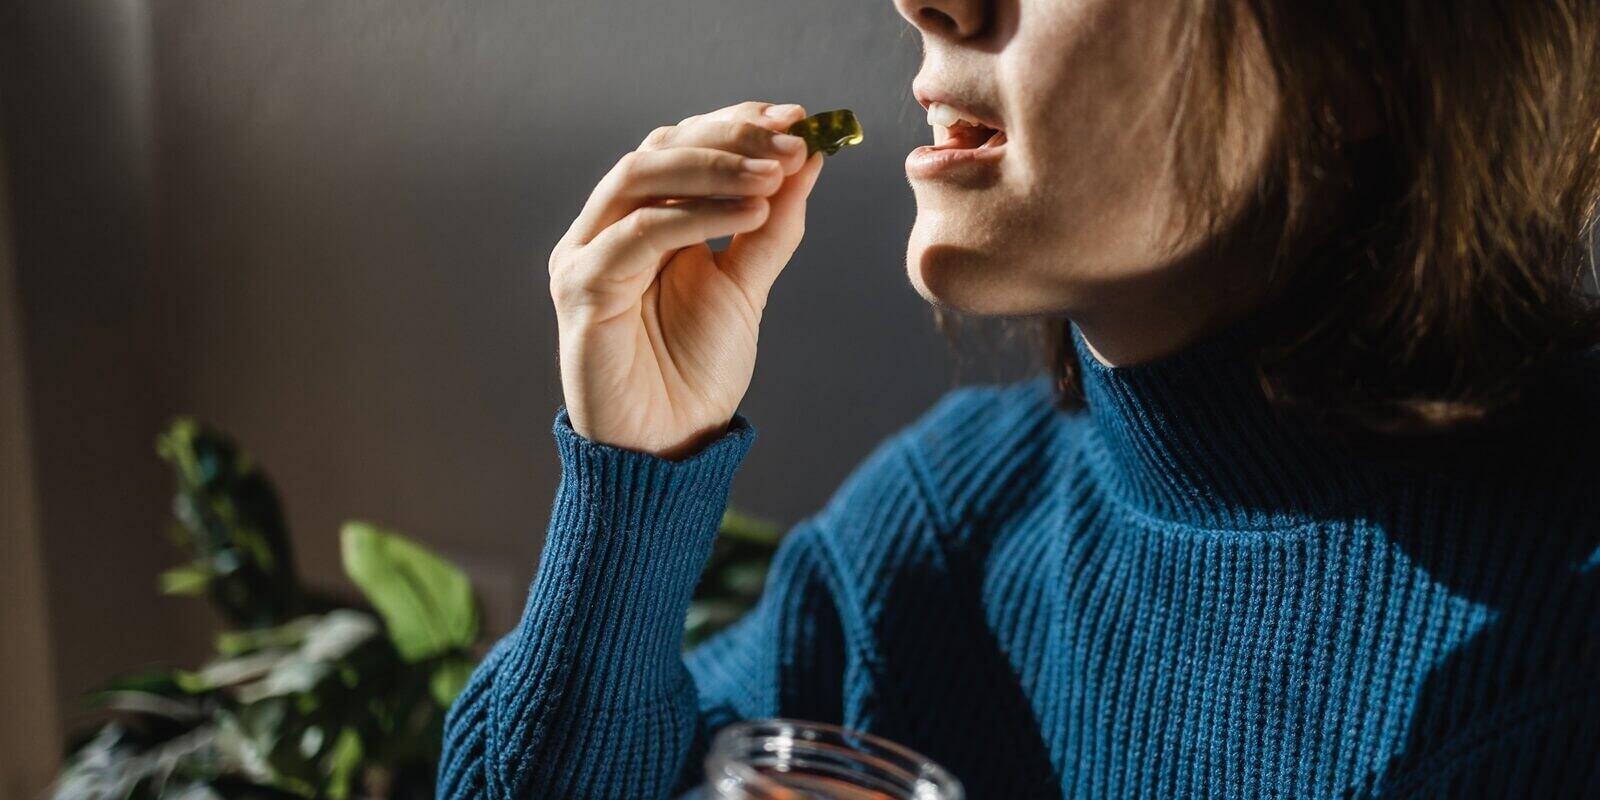 woman eating weed edible